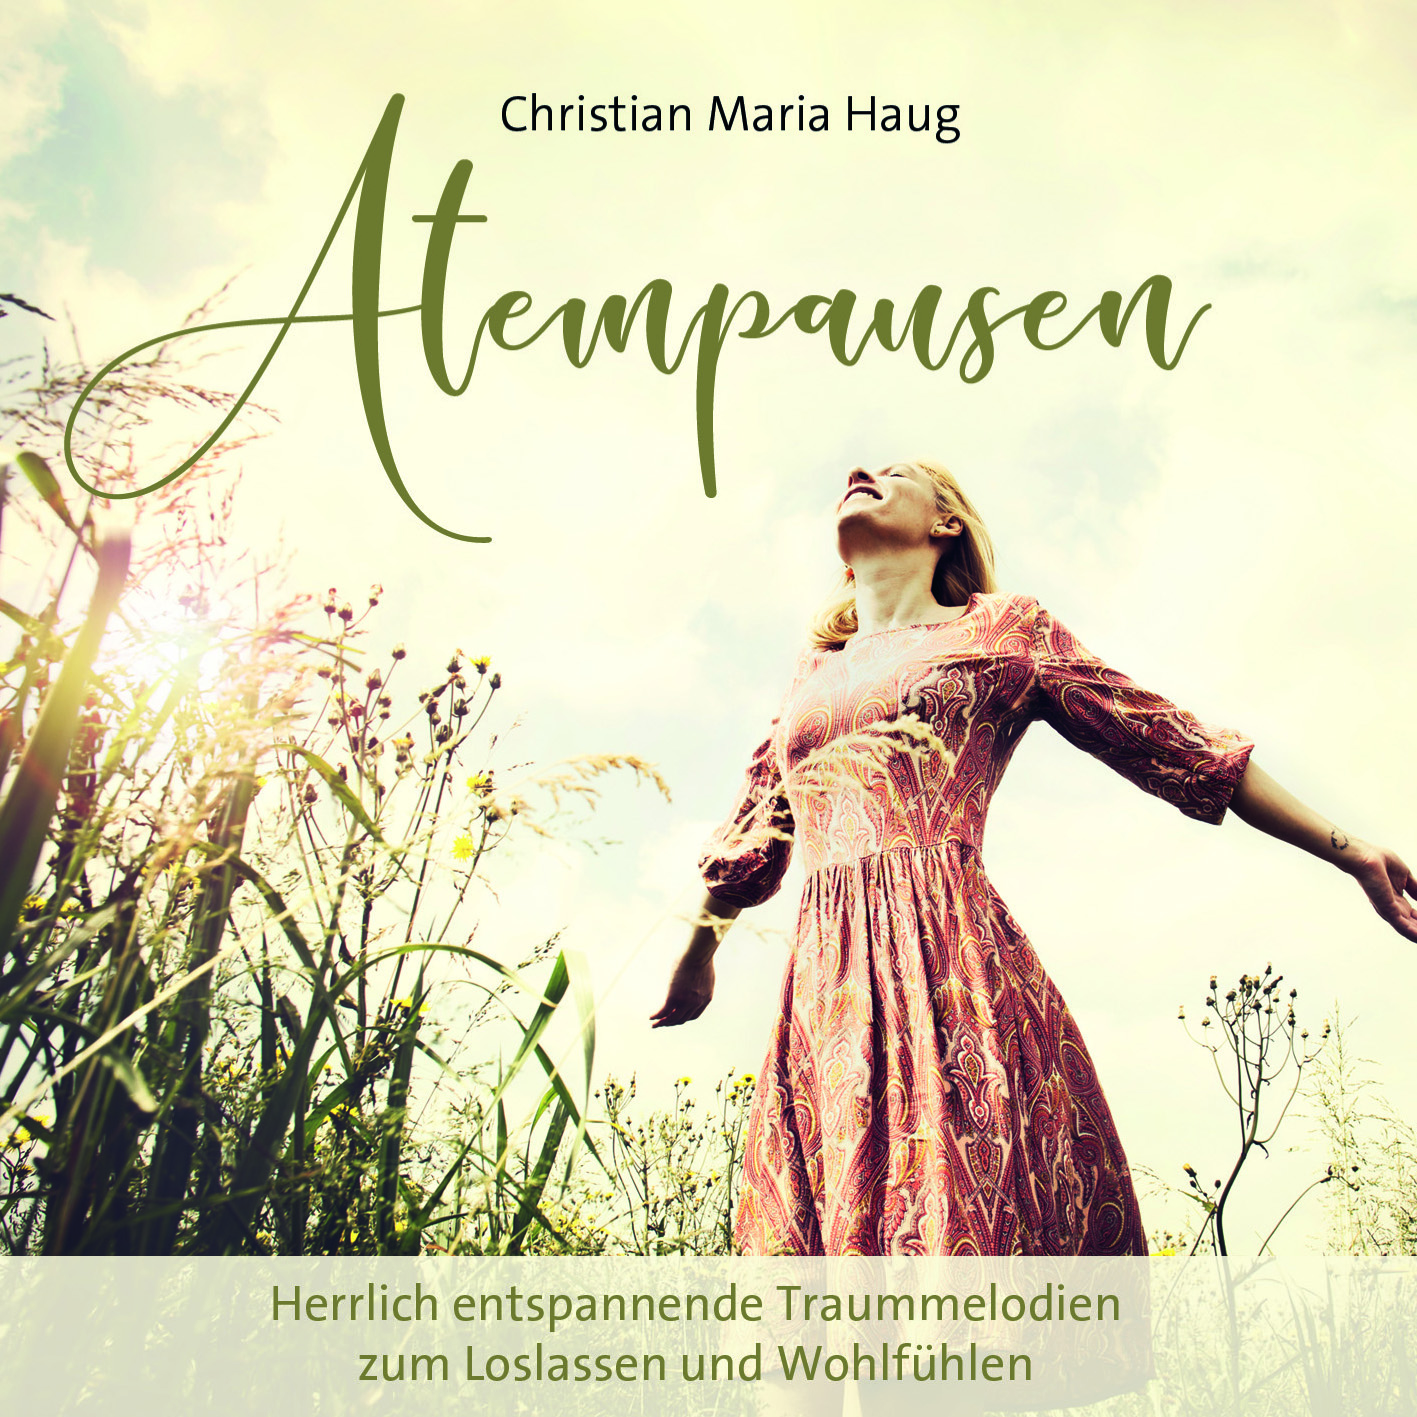 Atempausen - Christian Maria Haug - Traummelodien